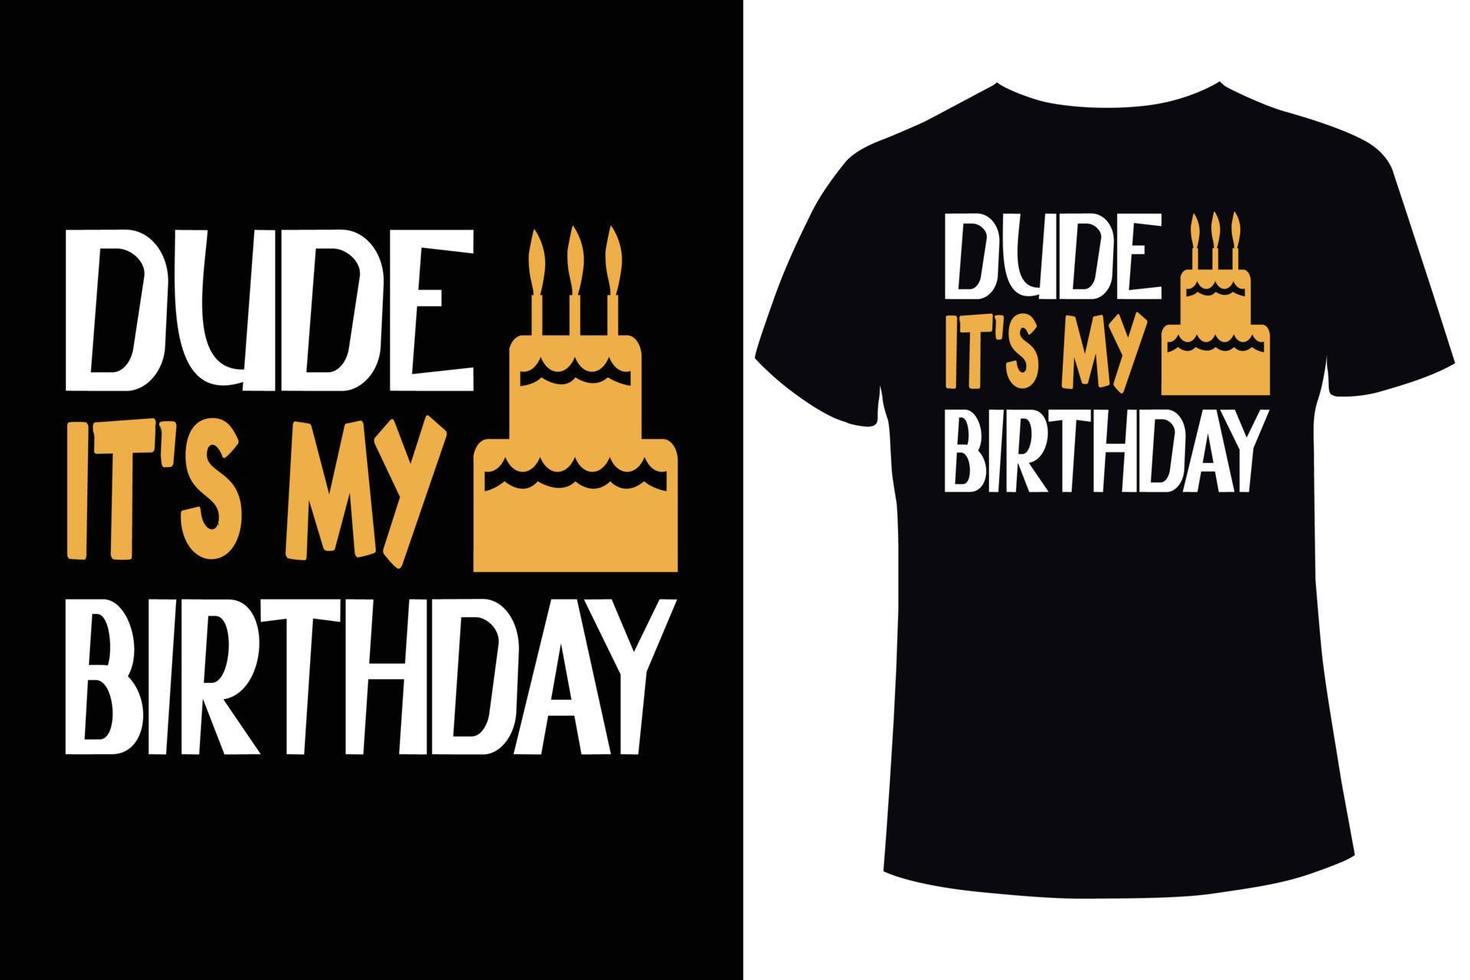 Dude it's my birthday t-shirt design template vector